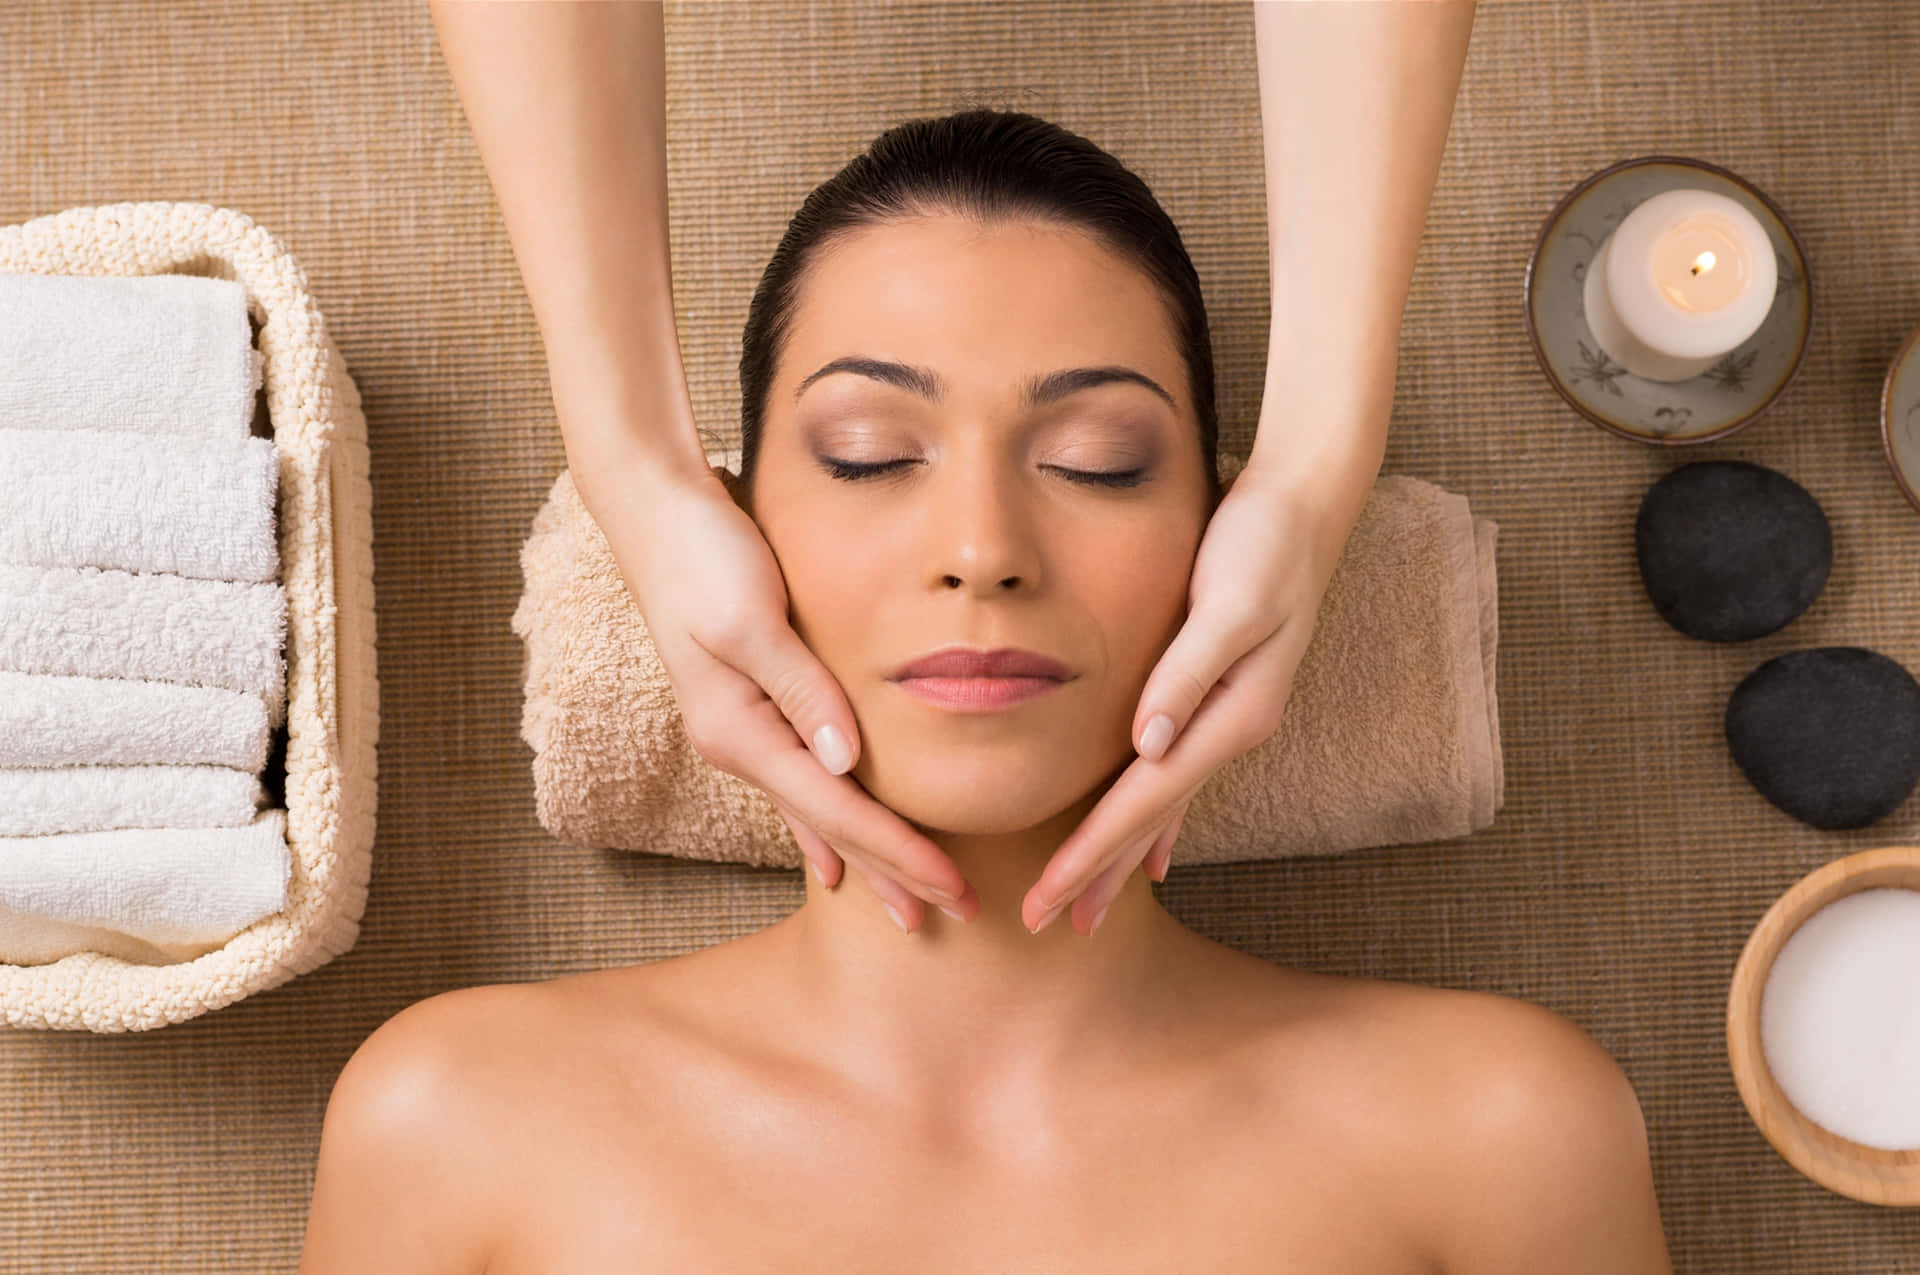 A Woman Getting A Facial Massage At A Spa Wallpaper